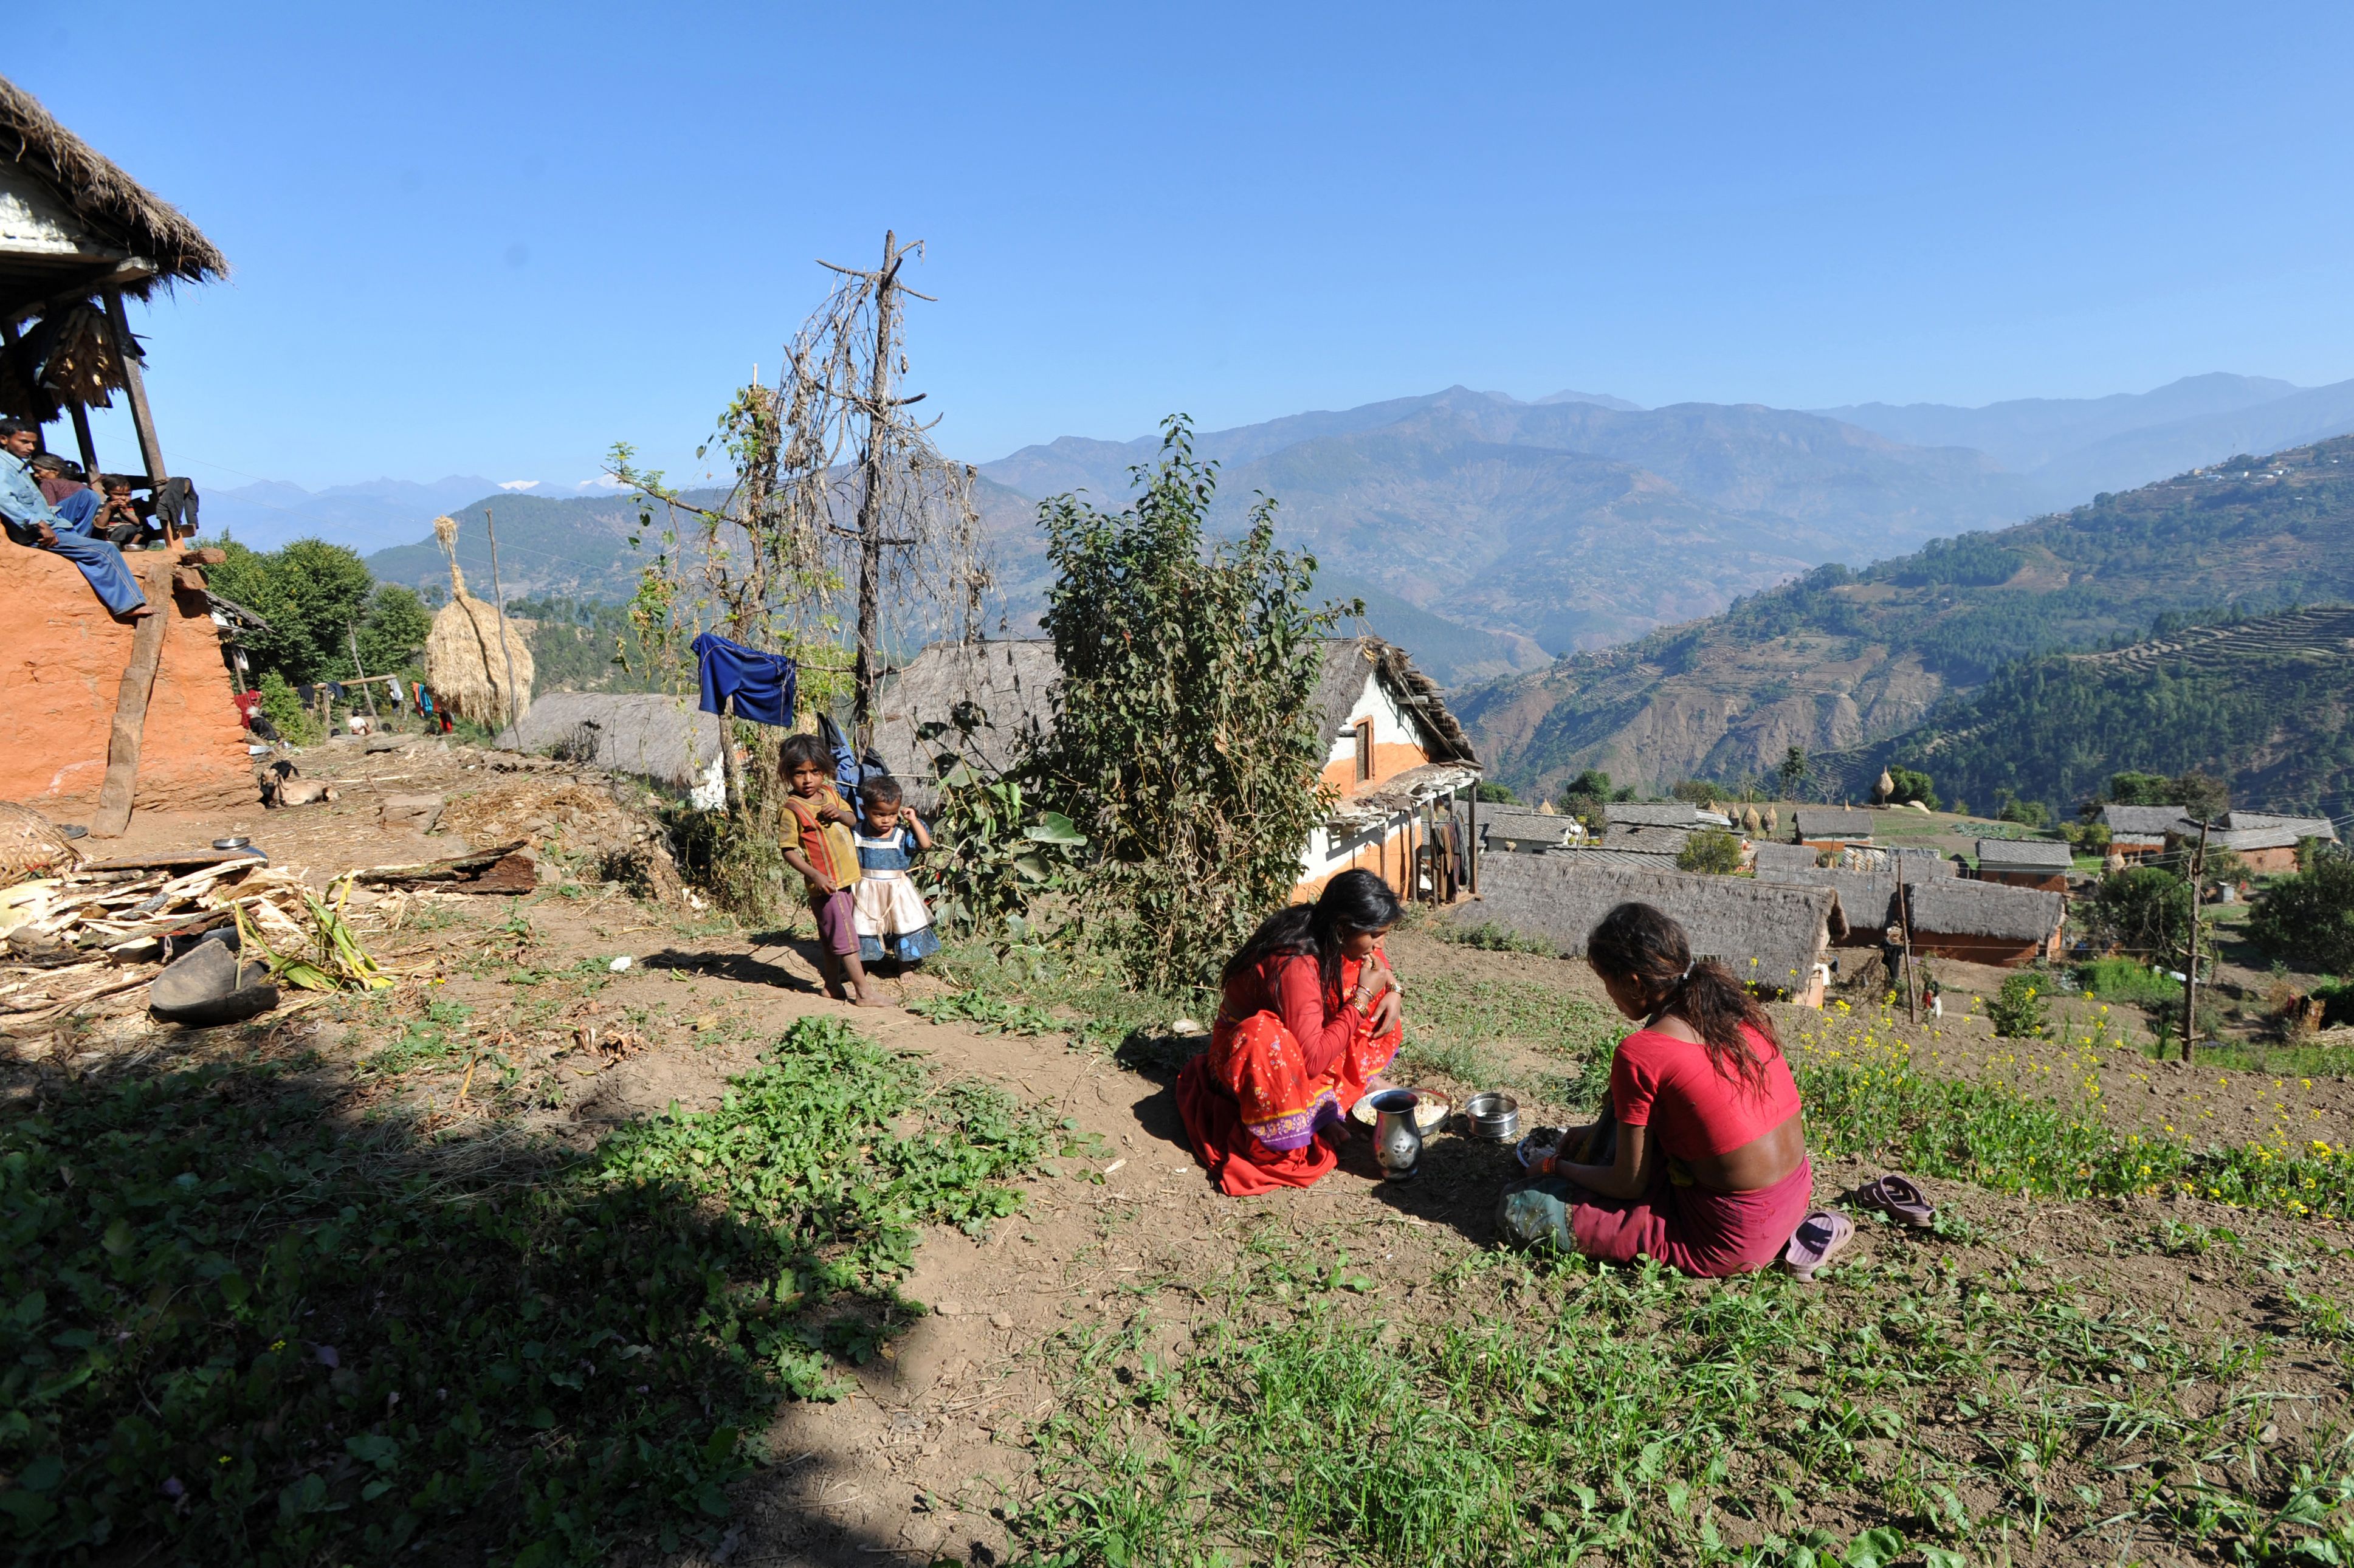 15agegirlsex - Nepal: 15-year-old girl dies in 'menstruation hut' | CNN